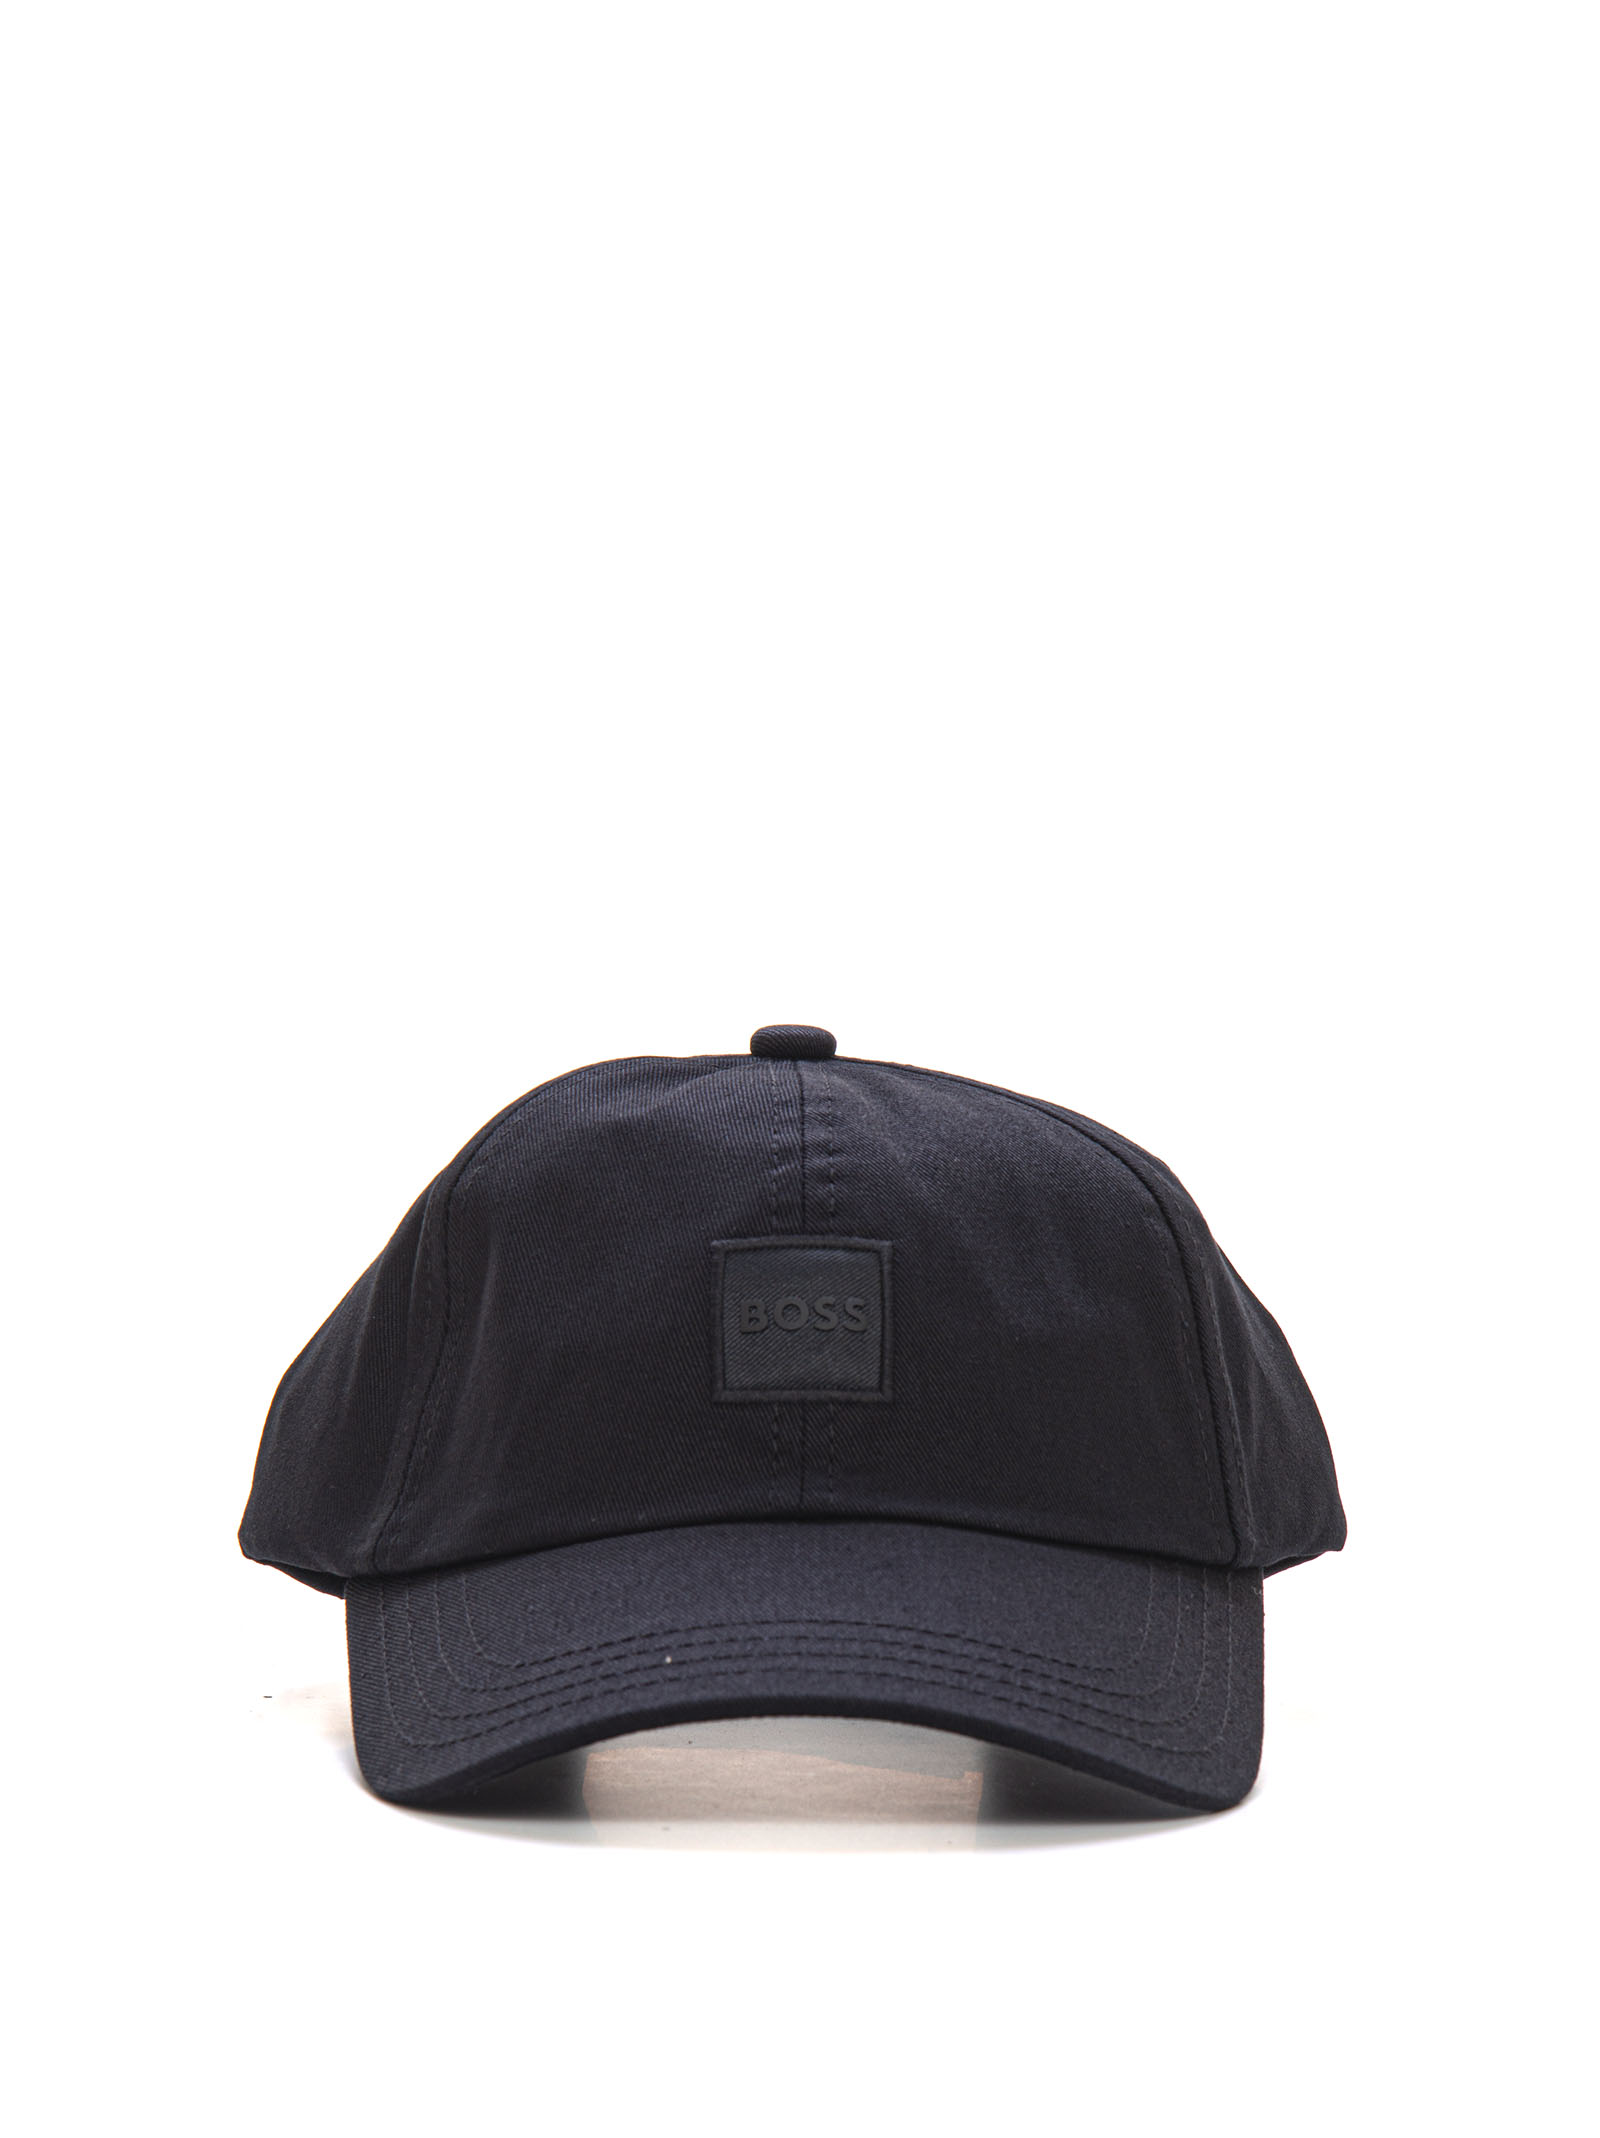 Hugo Boss Derrel Peaked Hat In Black